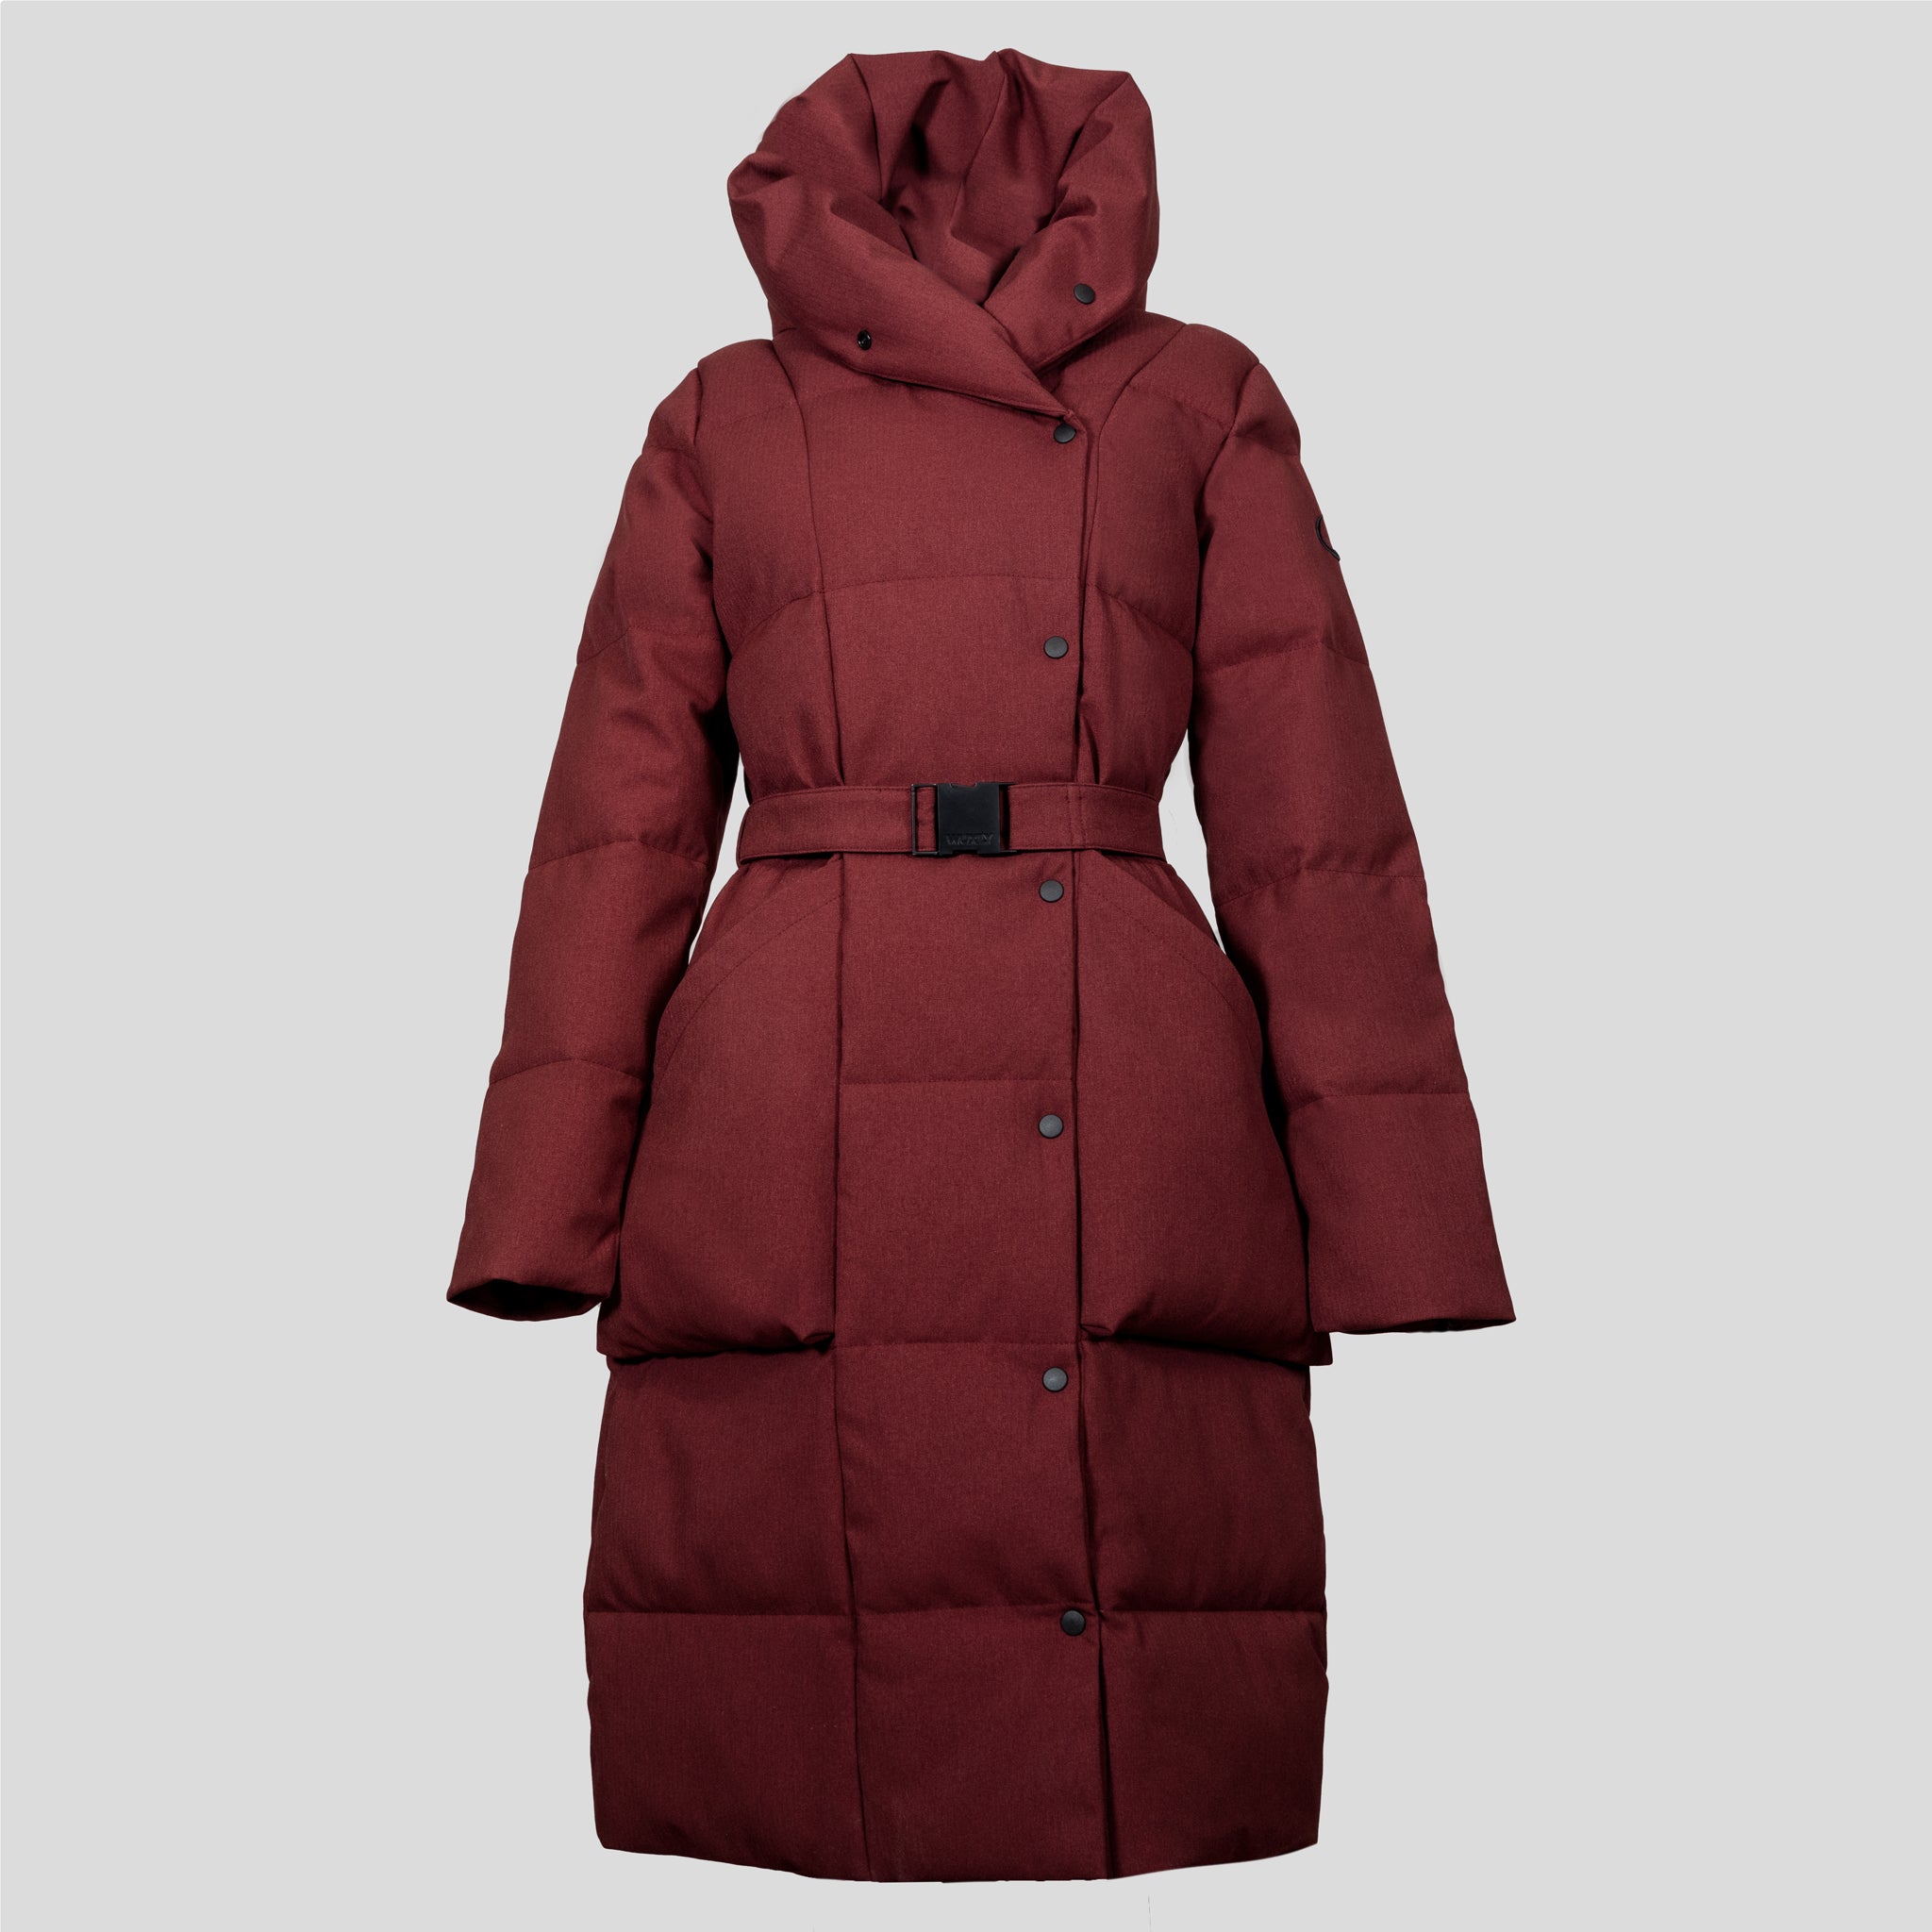 Womens Parkas | Down Alternative Winter Coats – Wuxly